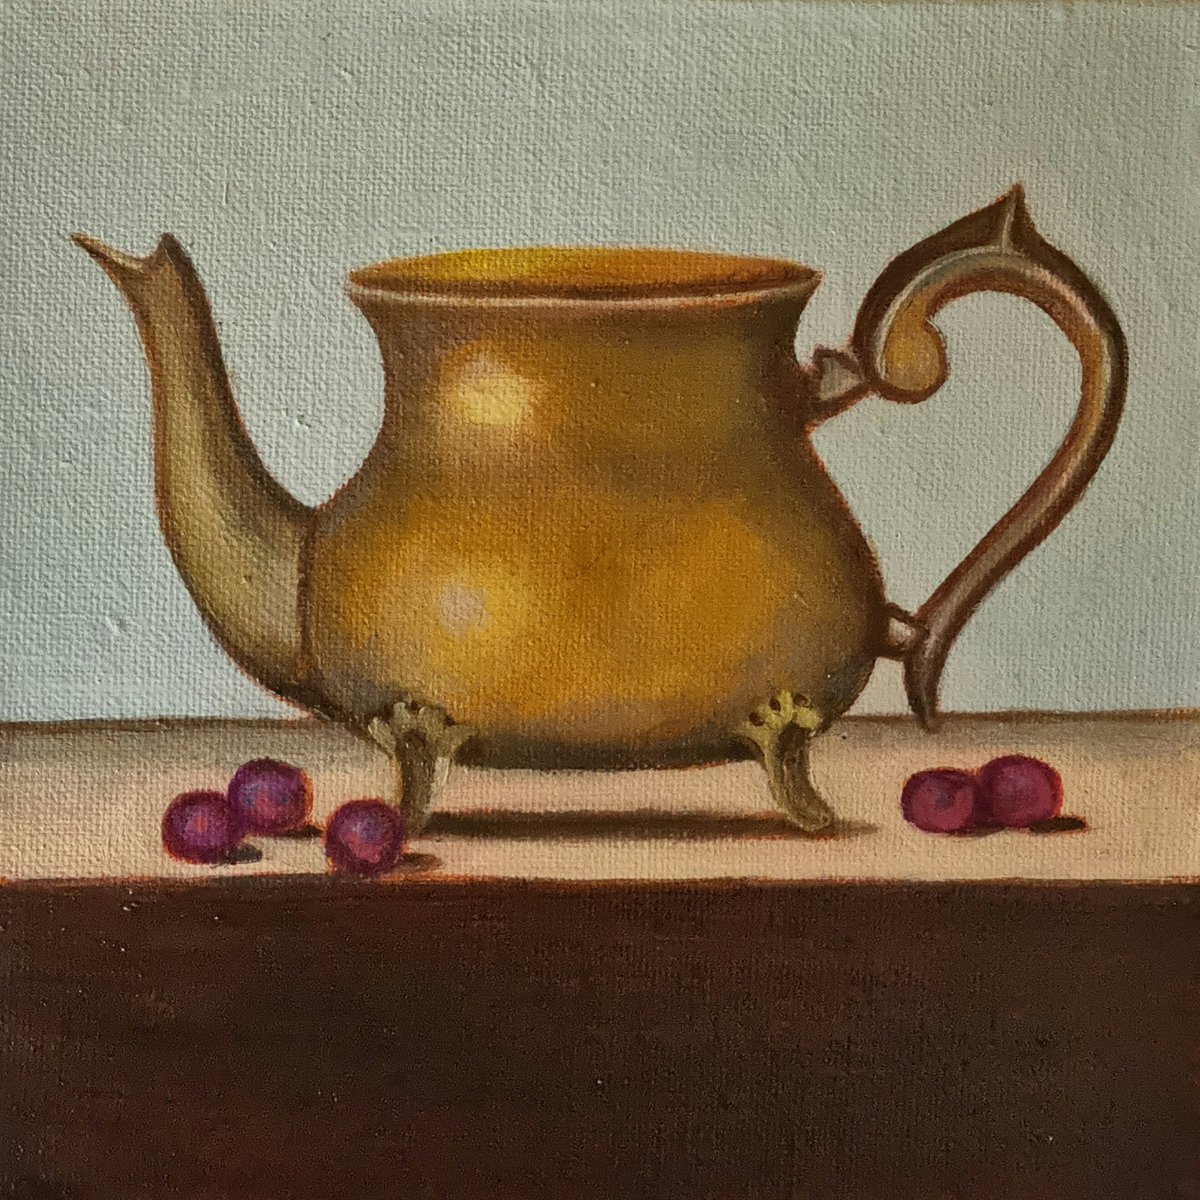 Berries and Brass pot by Priyanka Singh